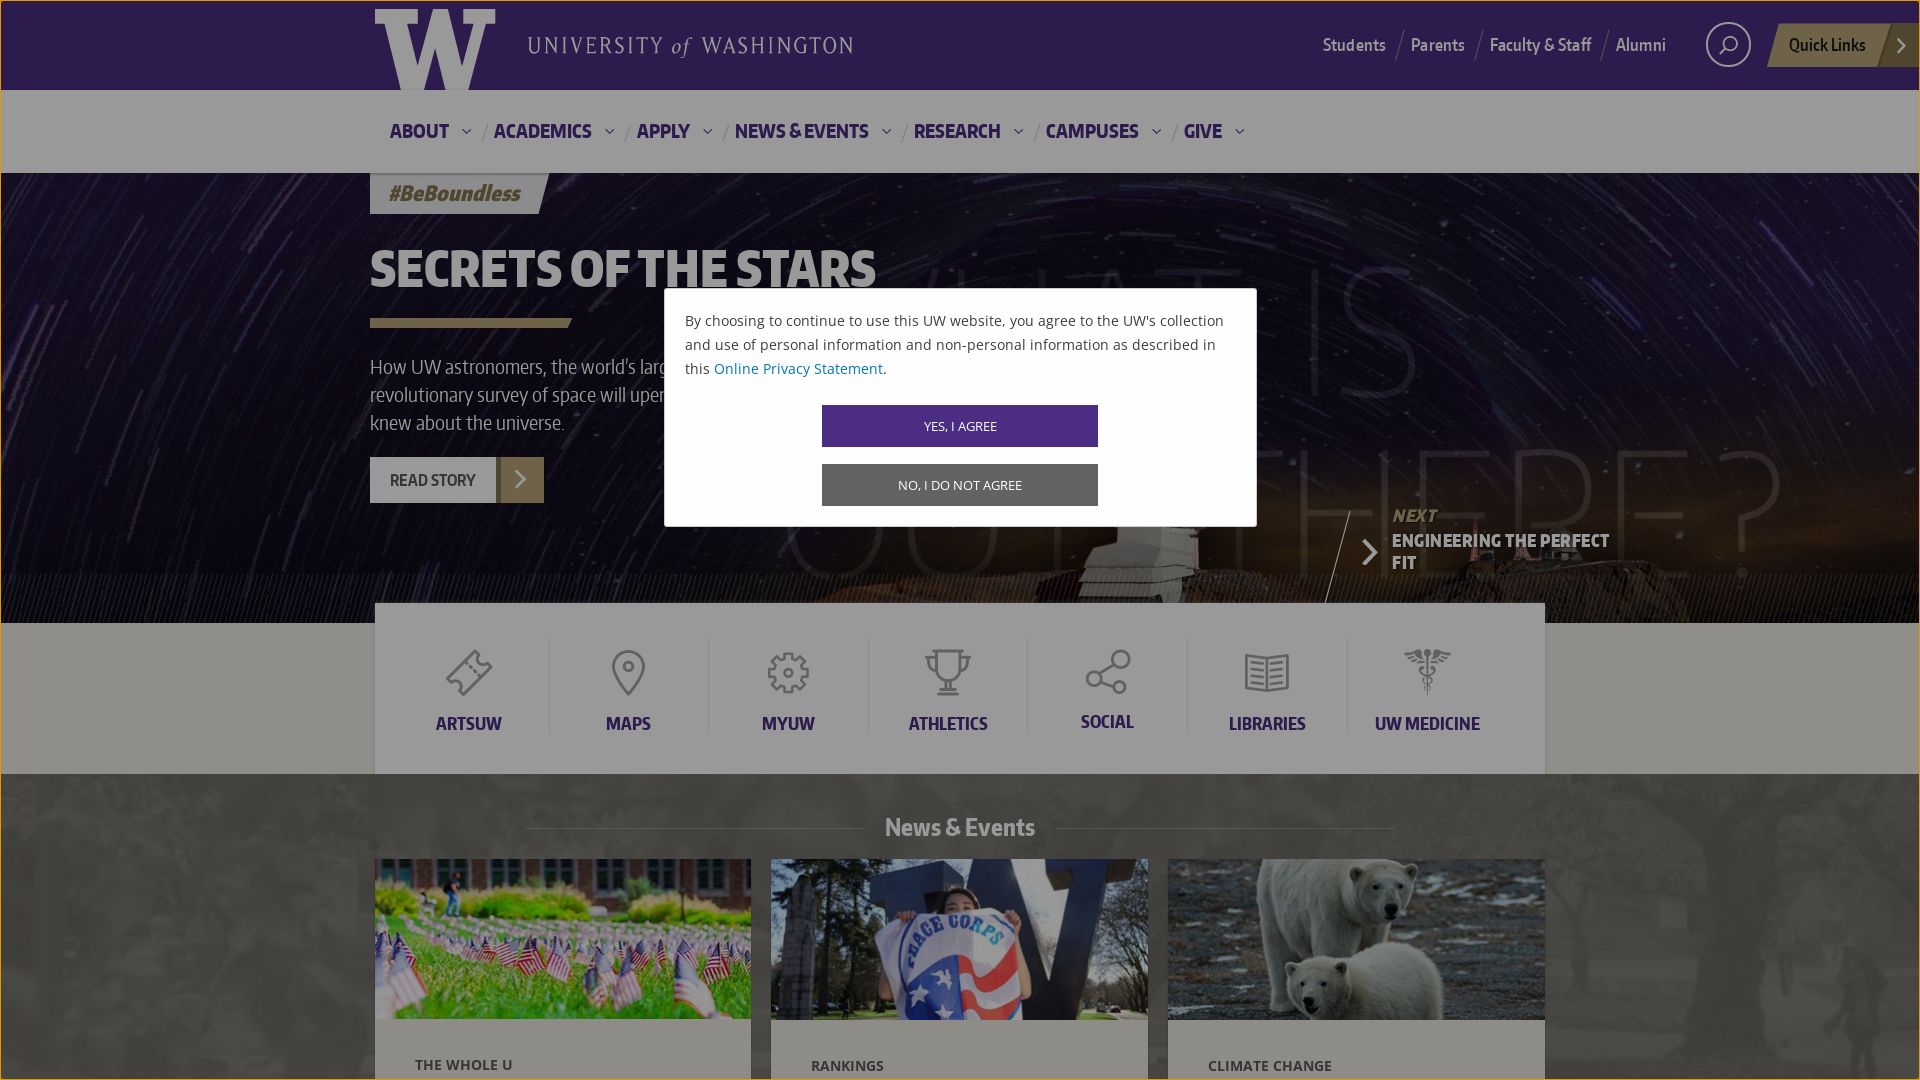 Status do site washington.edu está   ONLINE